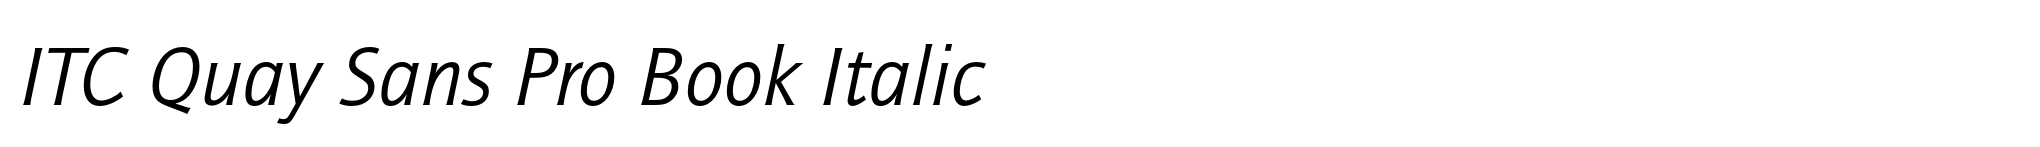 ITC Quay Sans Pro Book Italic image